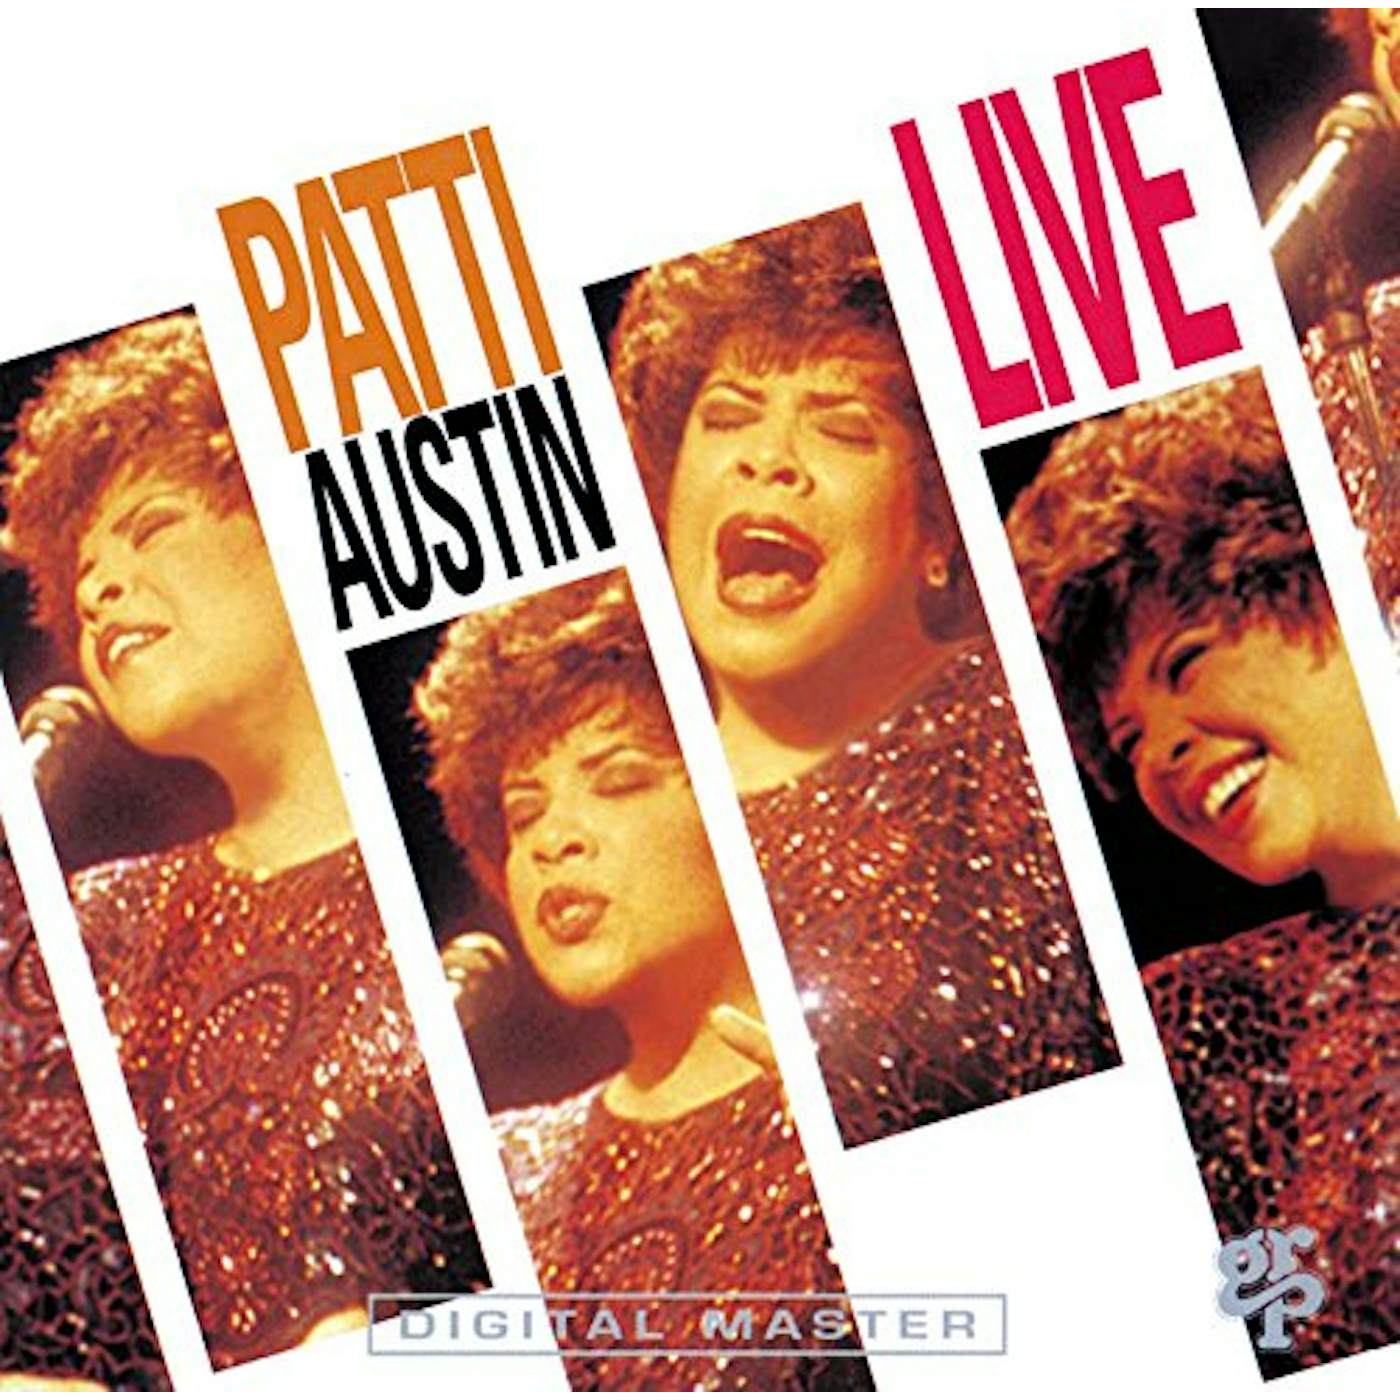 Patti Austin LIVE CD